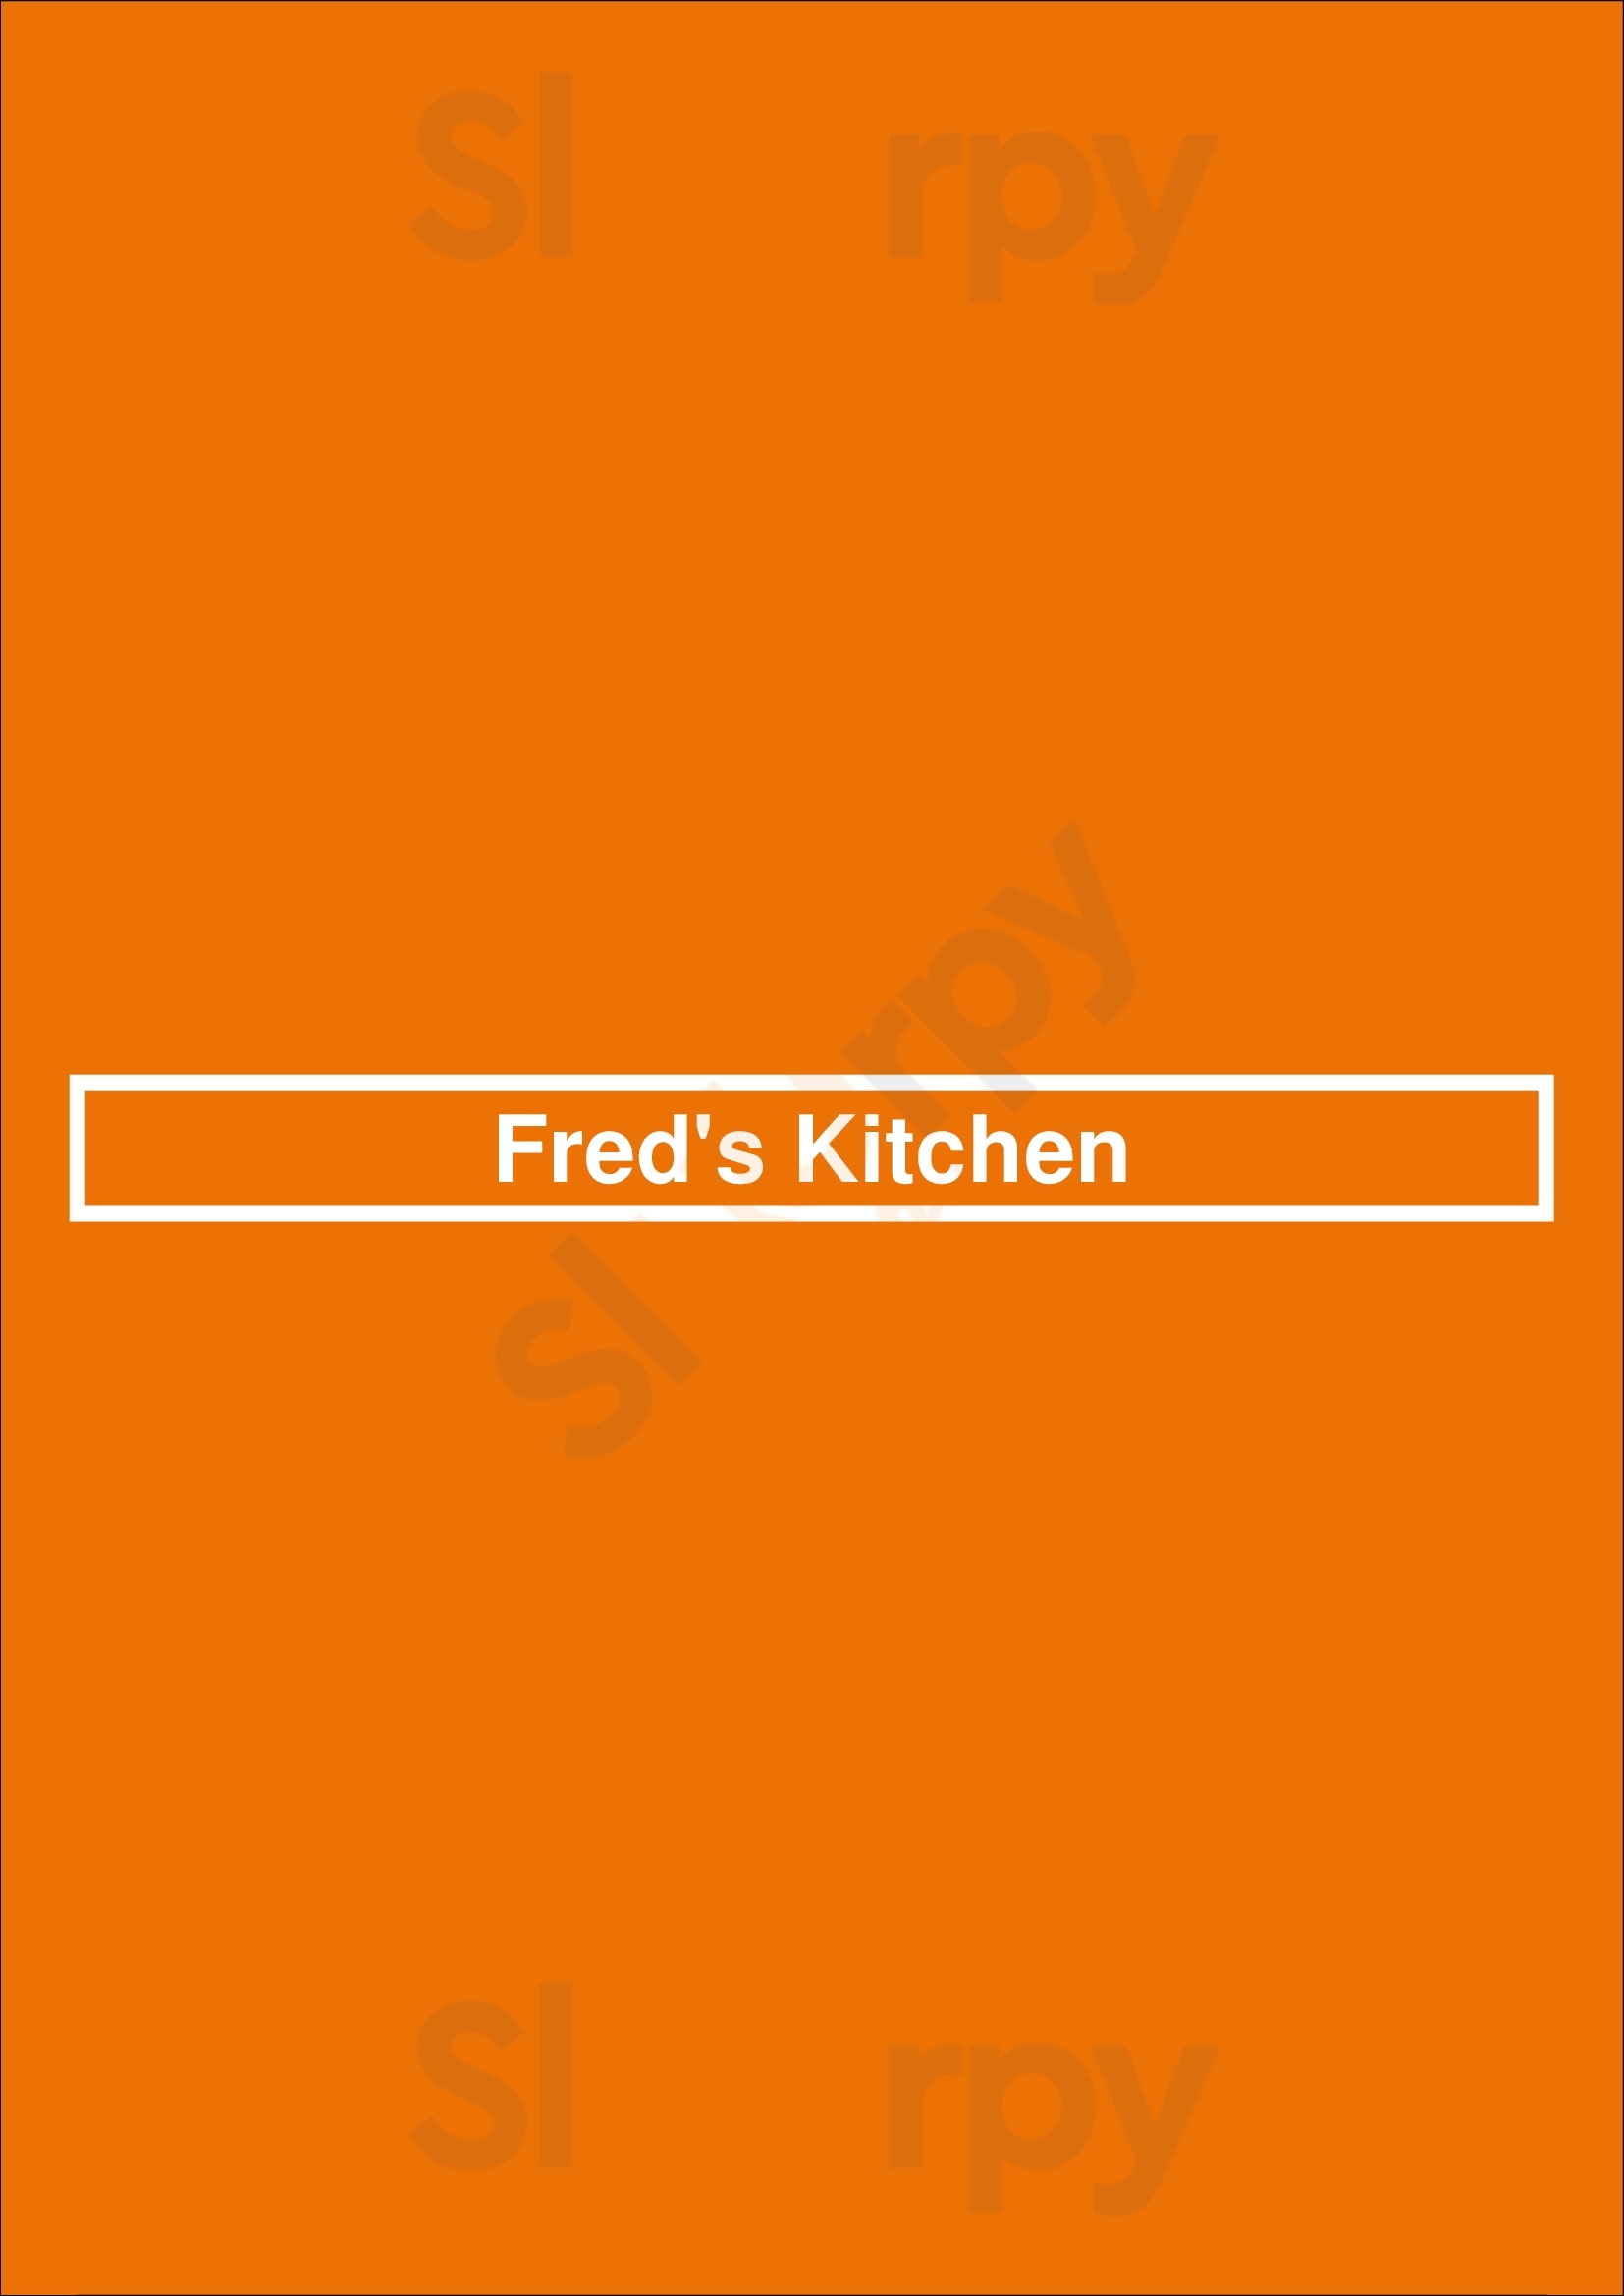 Fred's Kitchen Amsterdam Menu - 1